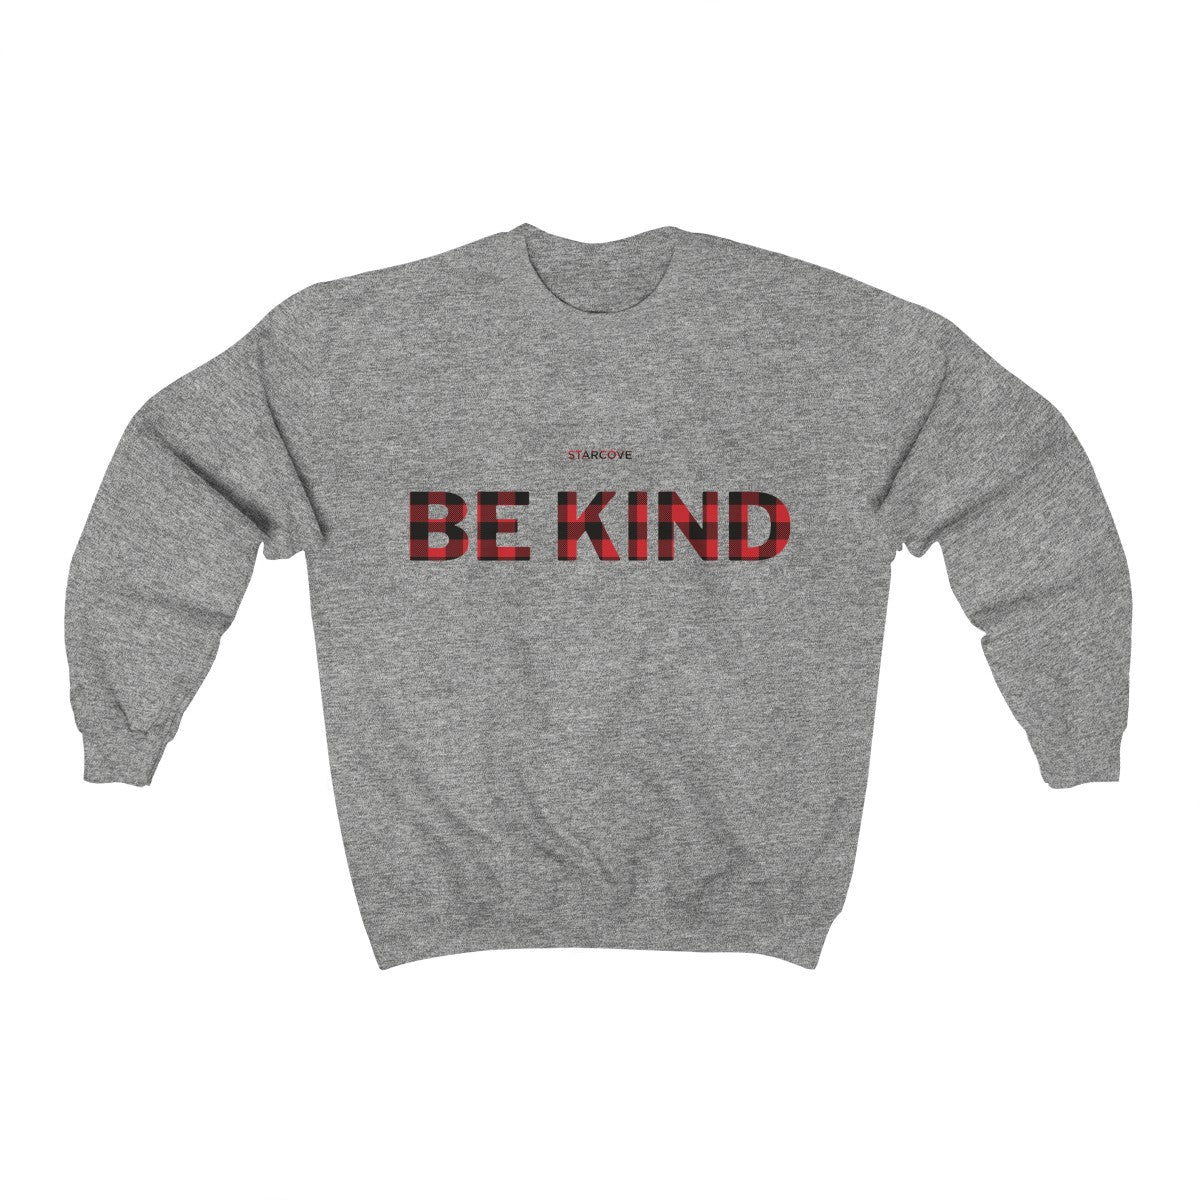 Be Kind Sweater, Buffalo Plaid Kindness Inspirational Teacher Fall Choose Kind School Kindness Crewneck Sweatshirt Gift Starcove Fashion